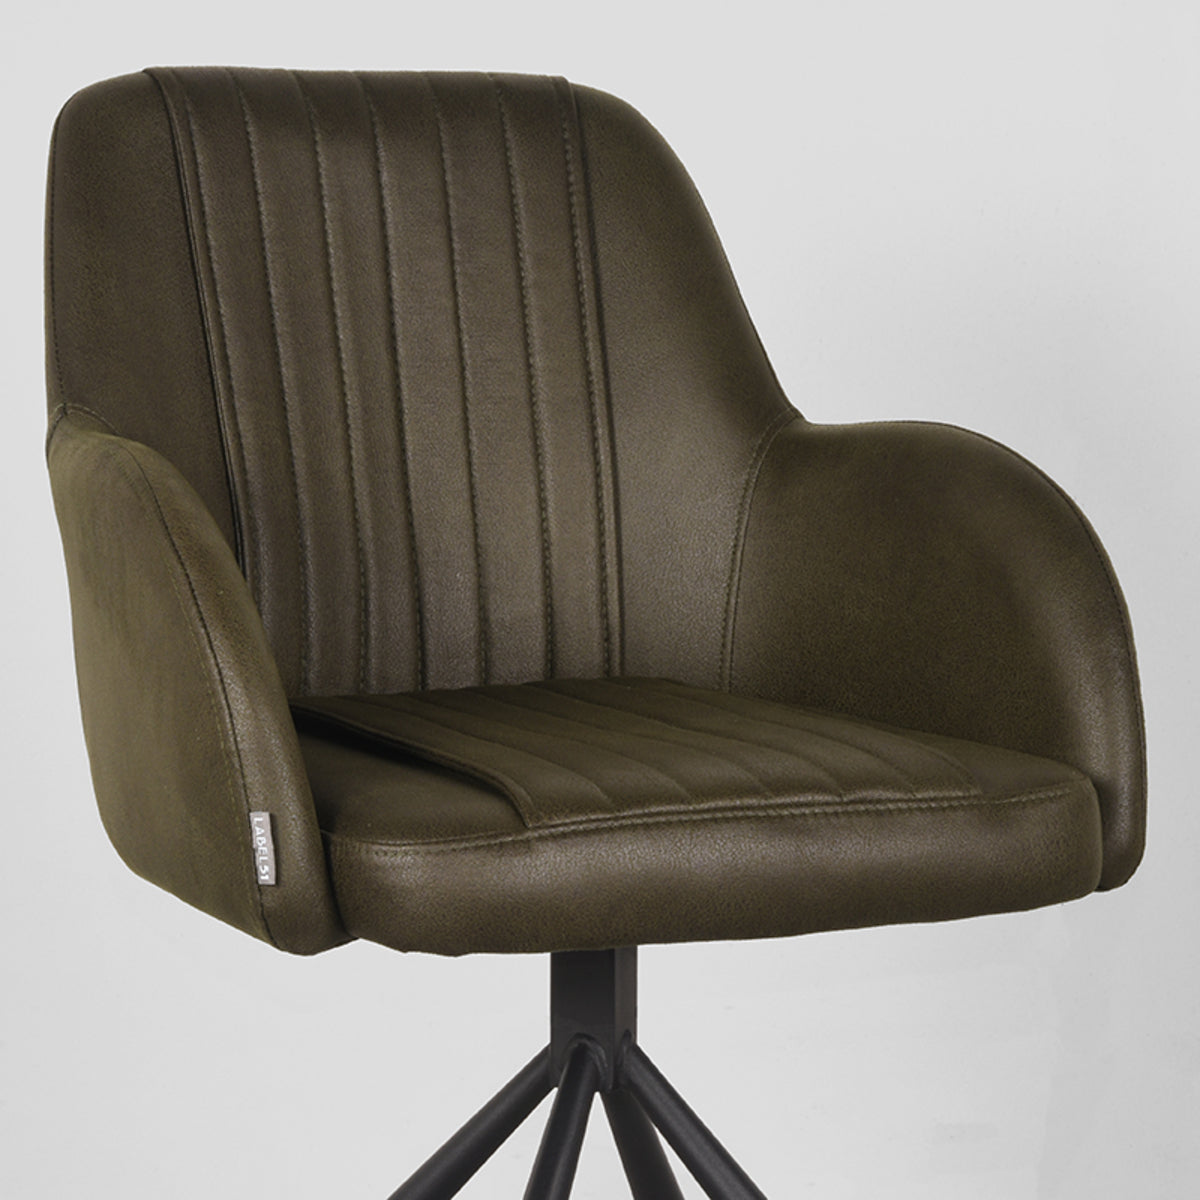 LABEL51 Novi dining room chair - Army green - Microfiber